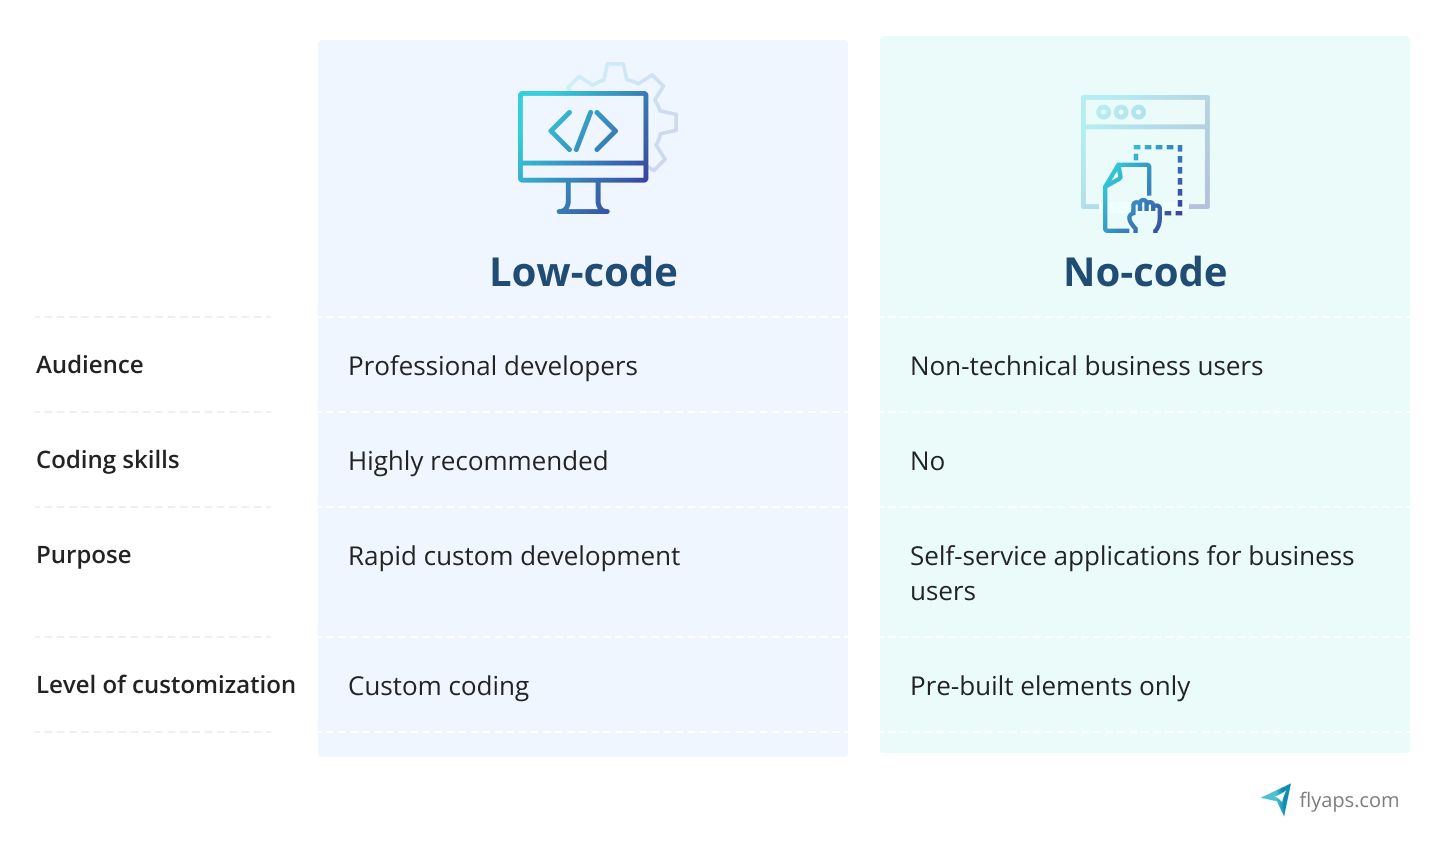 Differences between Low-code & No-code